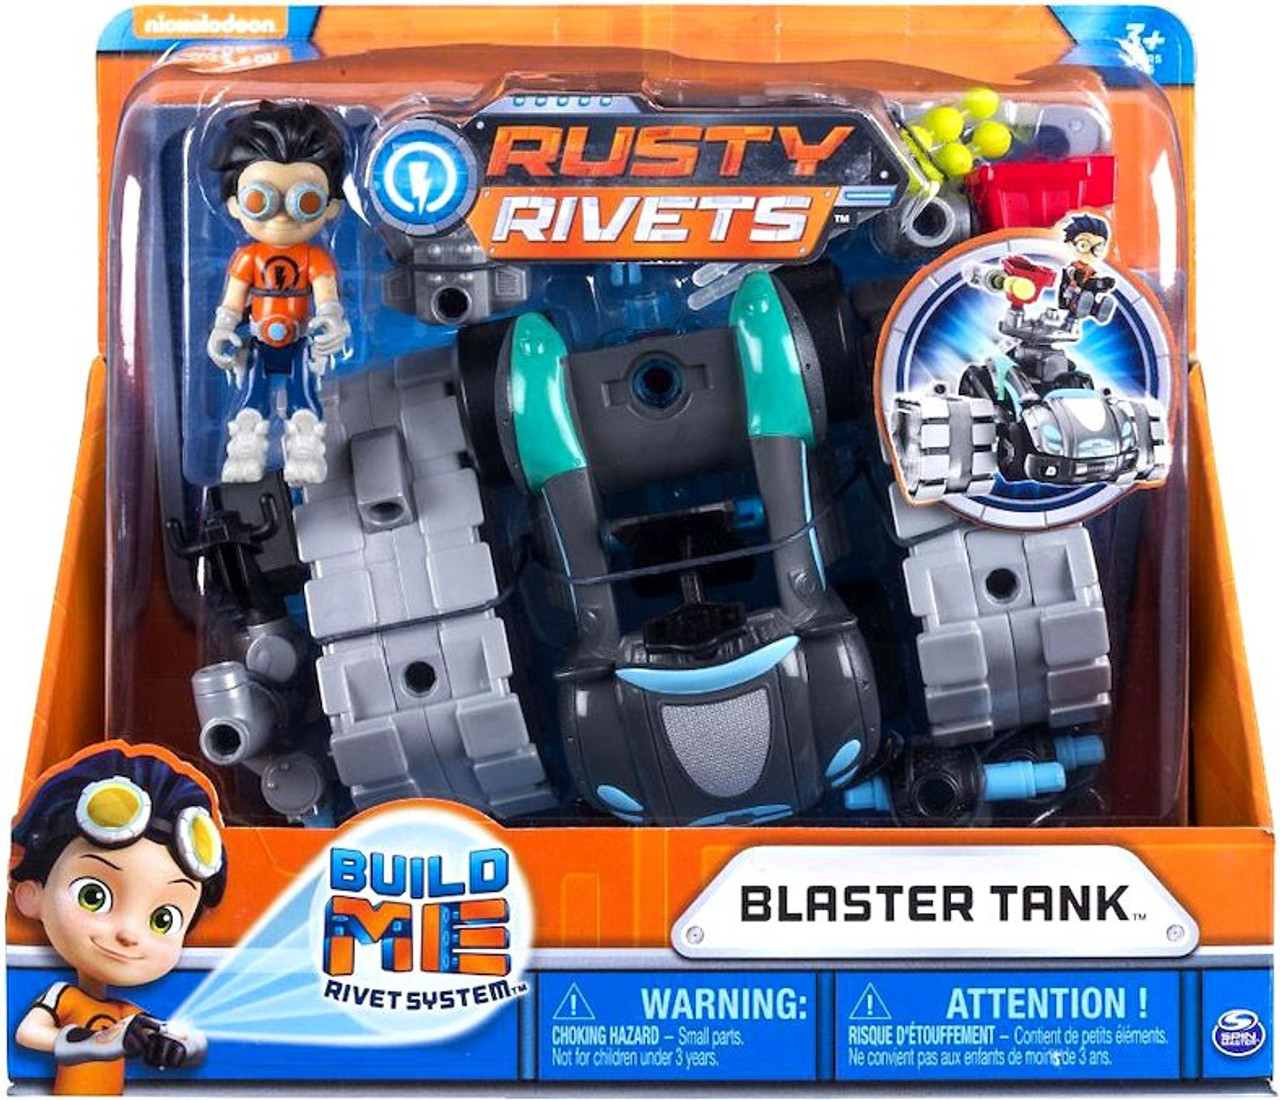 rusty rivets toys